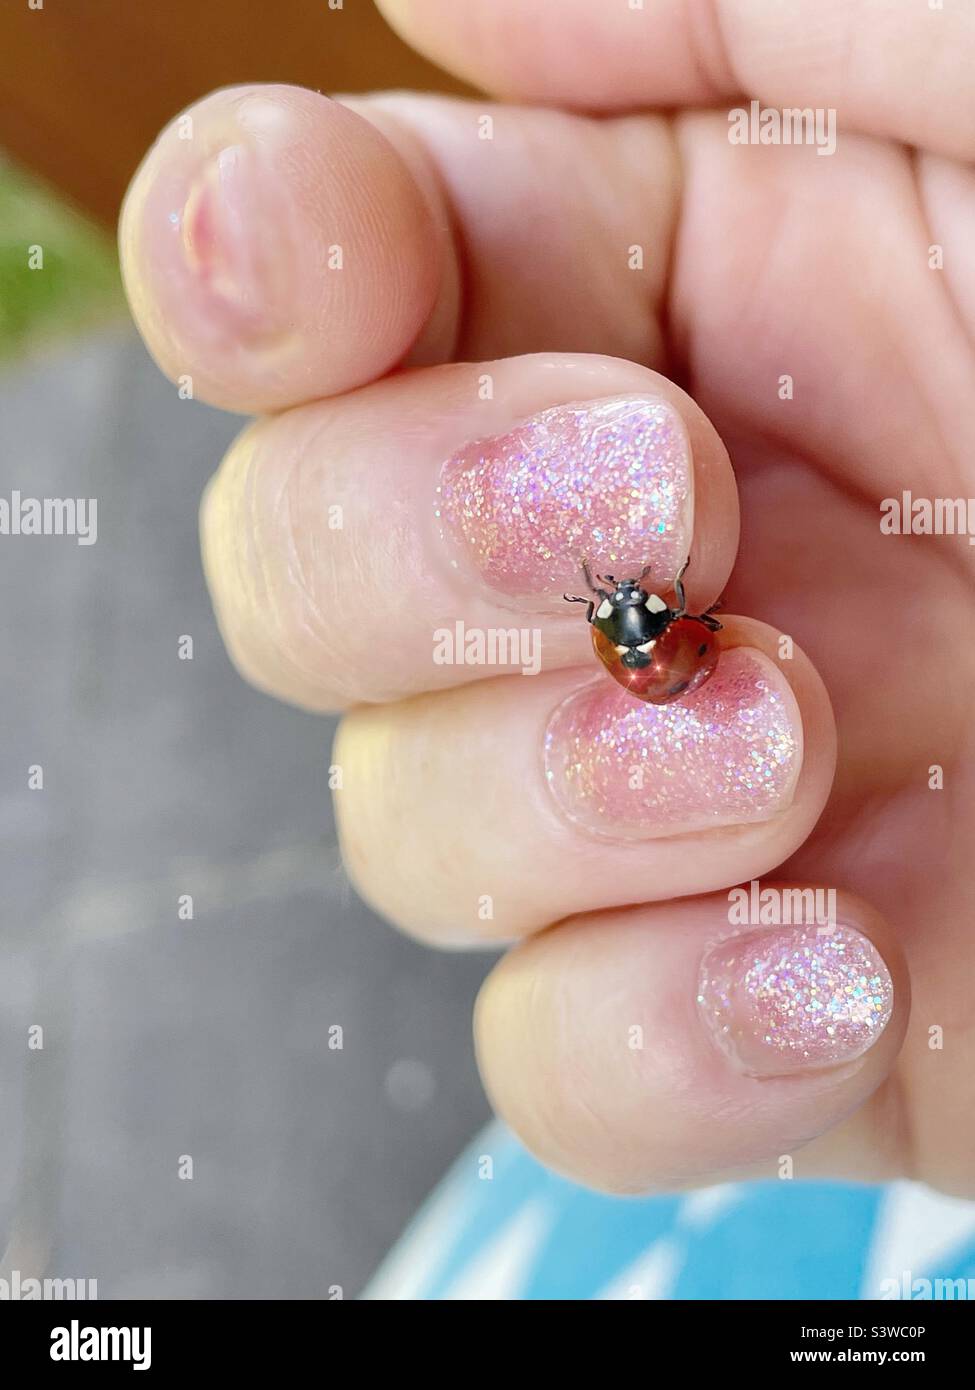 The bug on human fingers. Stock Photo